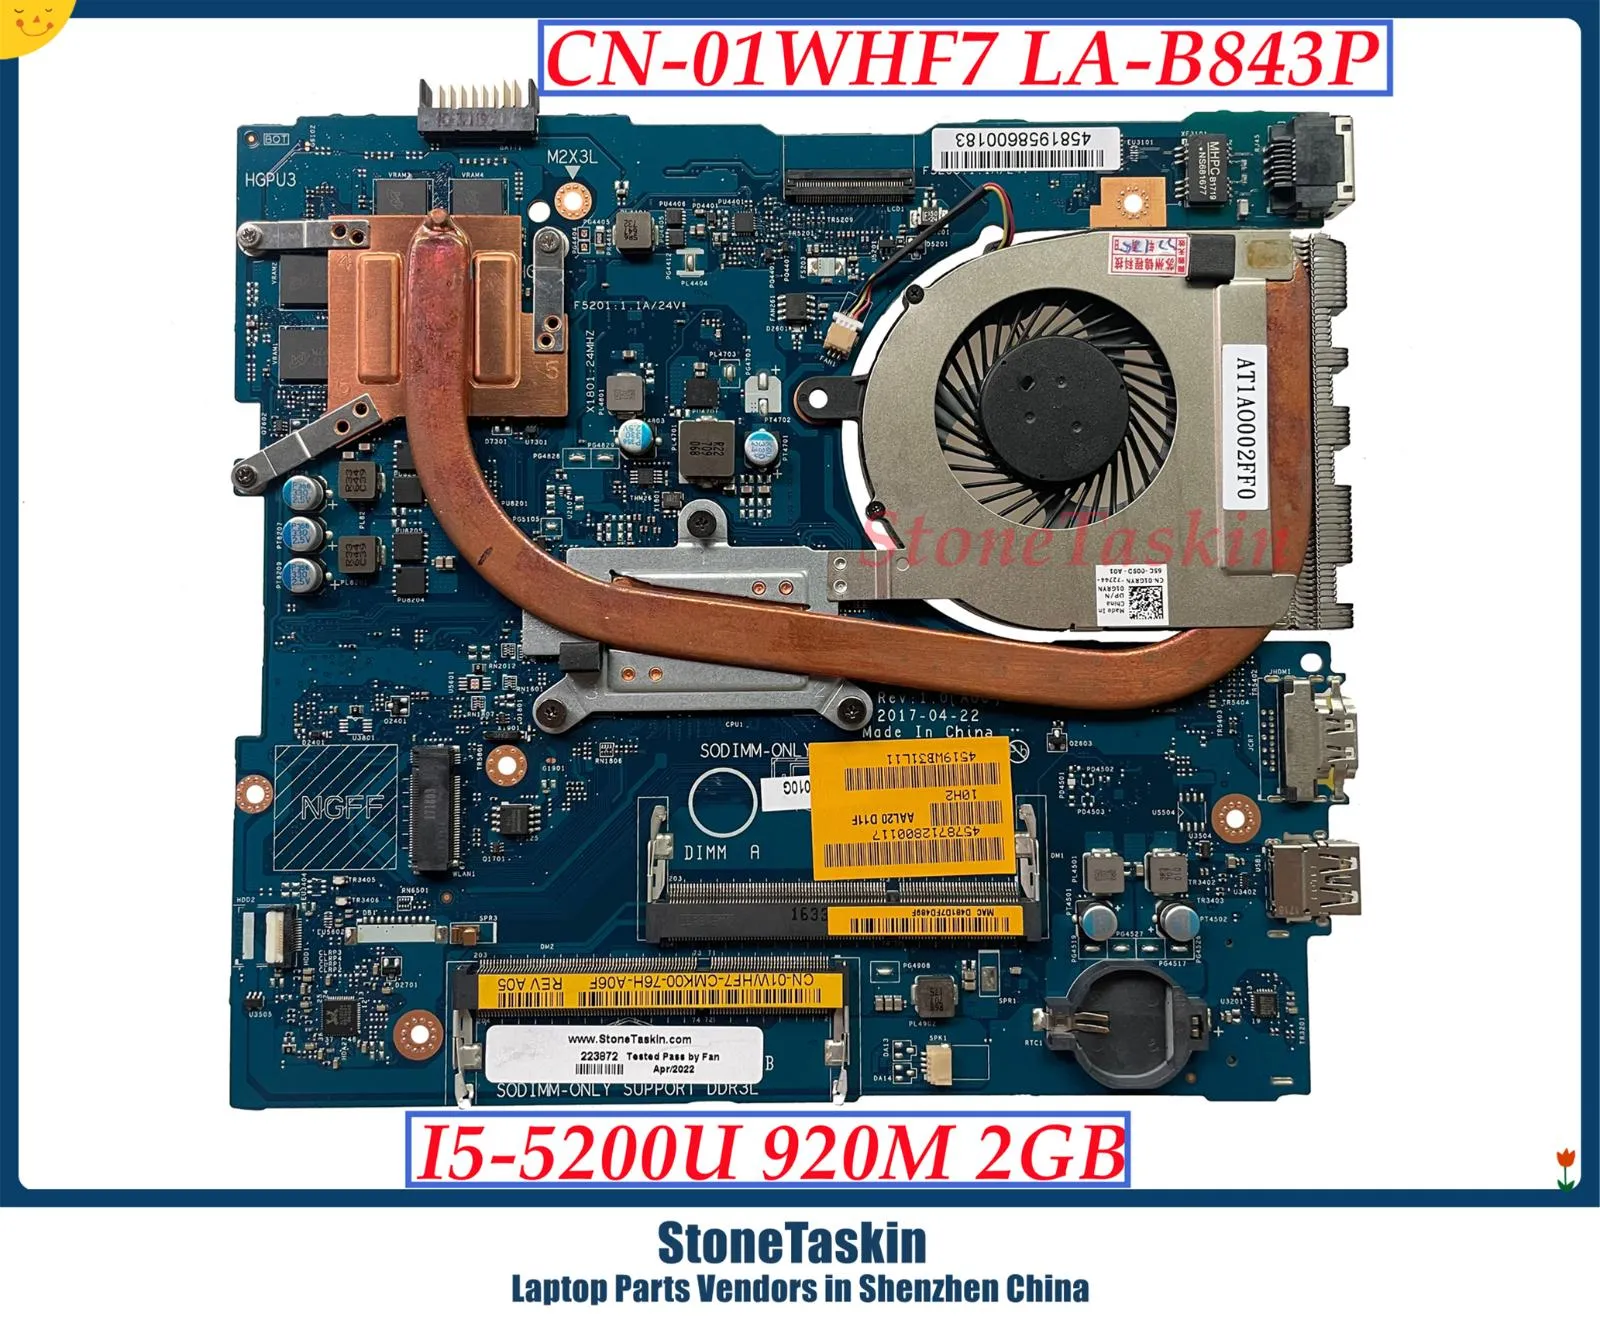 Motherboard StoneTaskin CN01WHF7 FOR Dell Inspiron 15 5458 5558 Motherboard Mainboard AAL10 LAB843P I55200U or I75500U 920M 2GB Upgrade